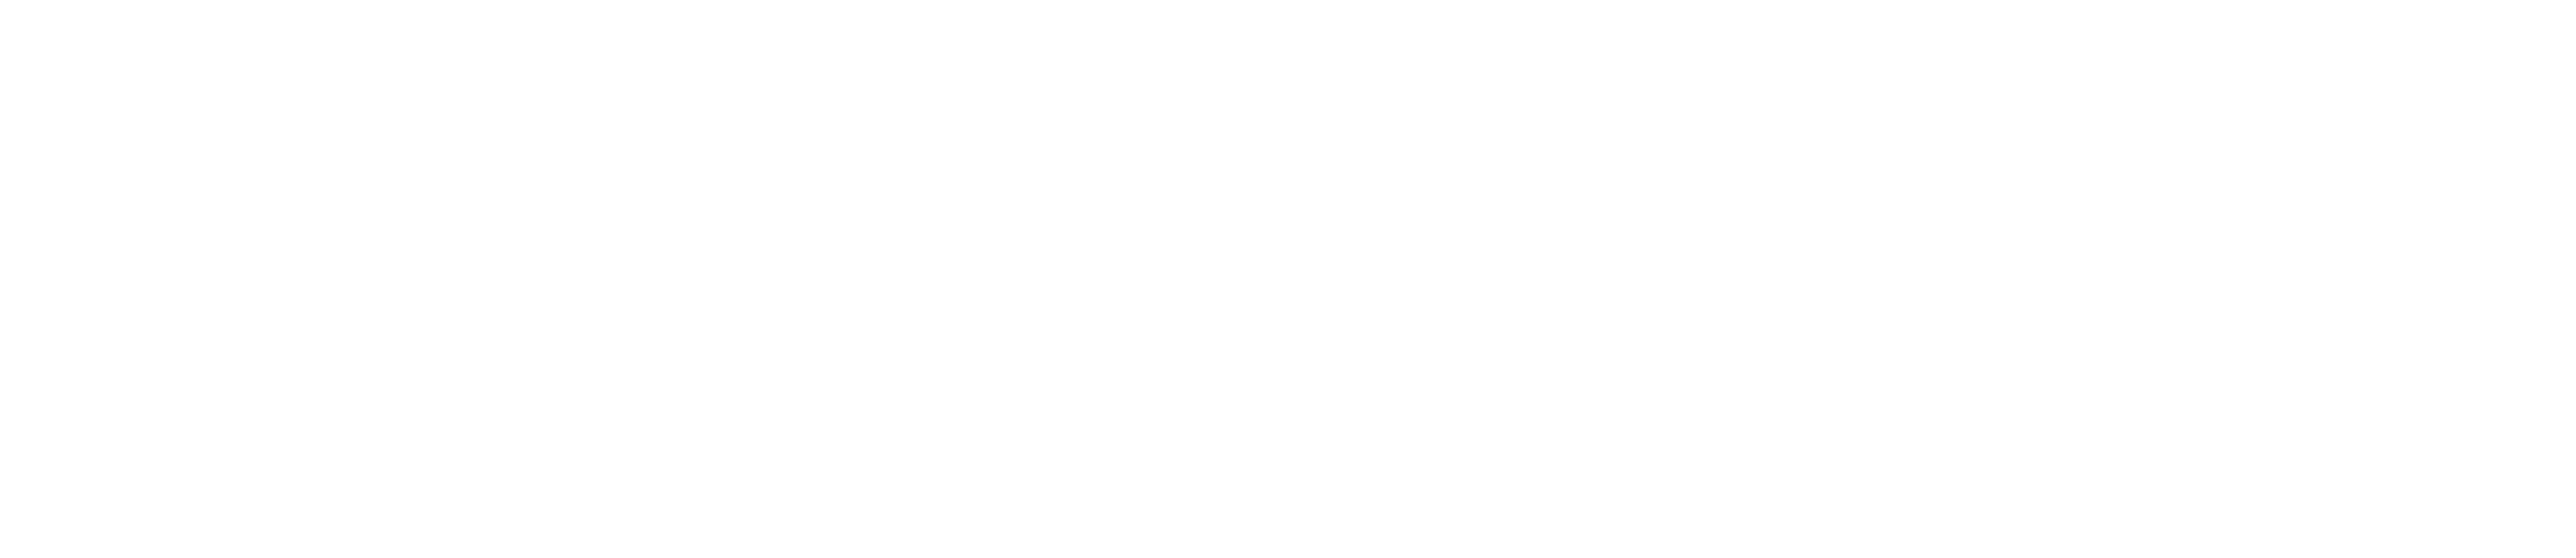 Logo Gruppo Autotorino